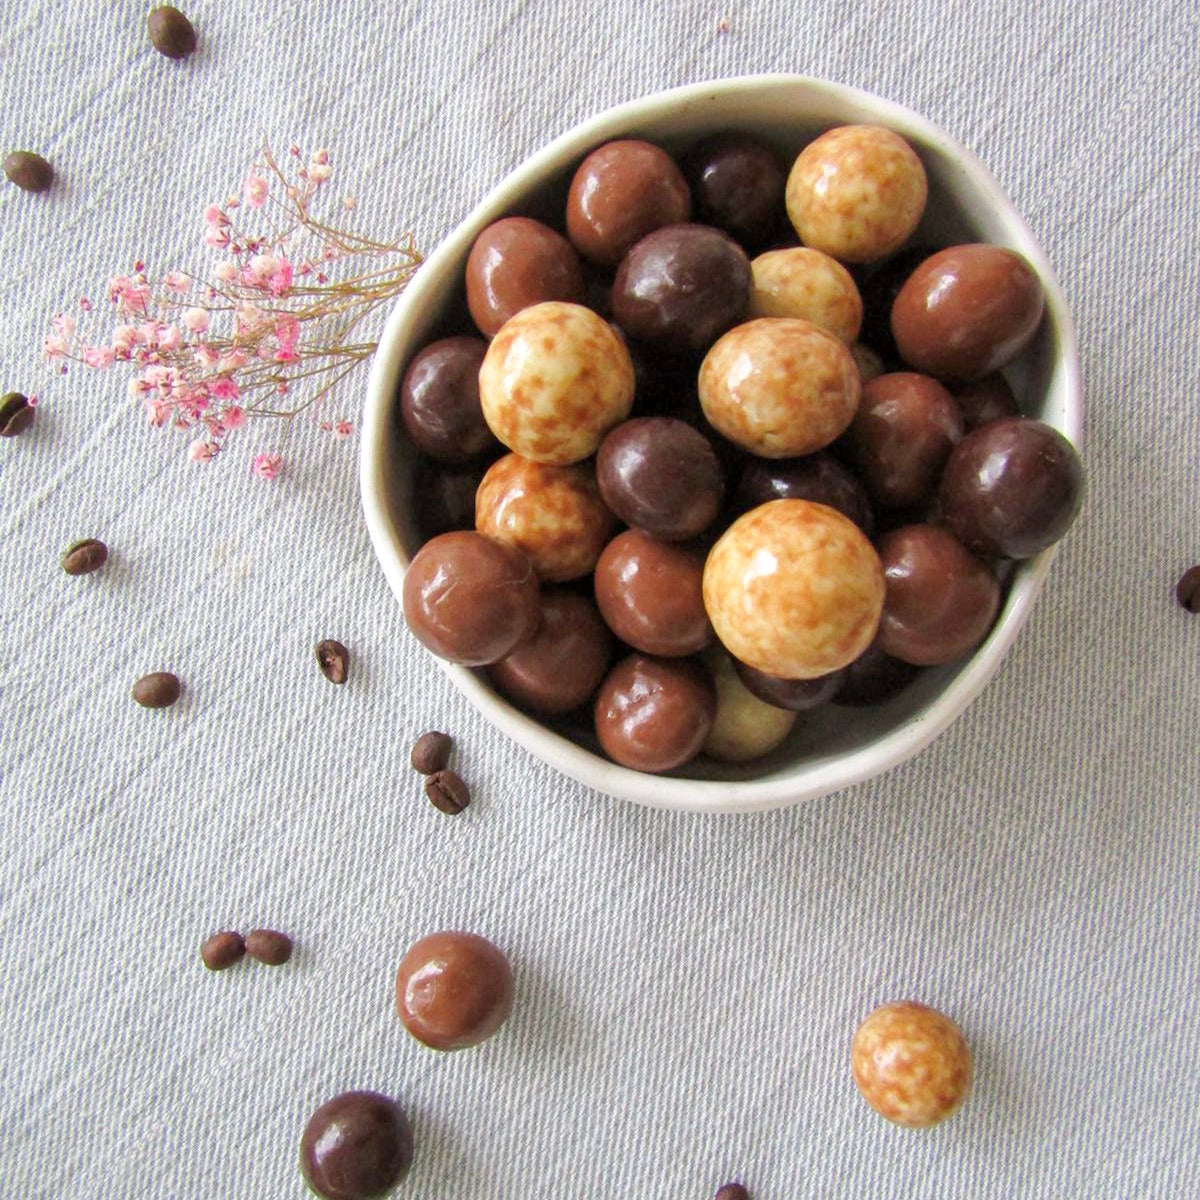 Moon Macadamia Medley (Chocolates) Image 2 - Naked Foods